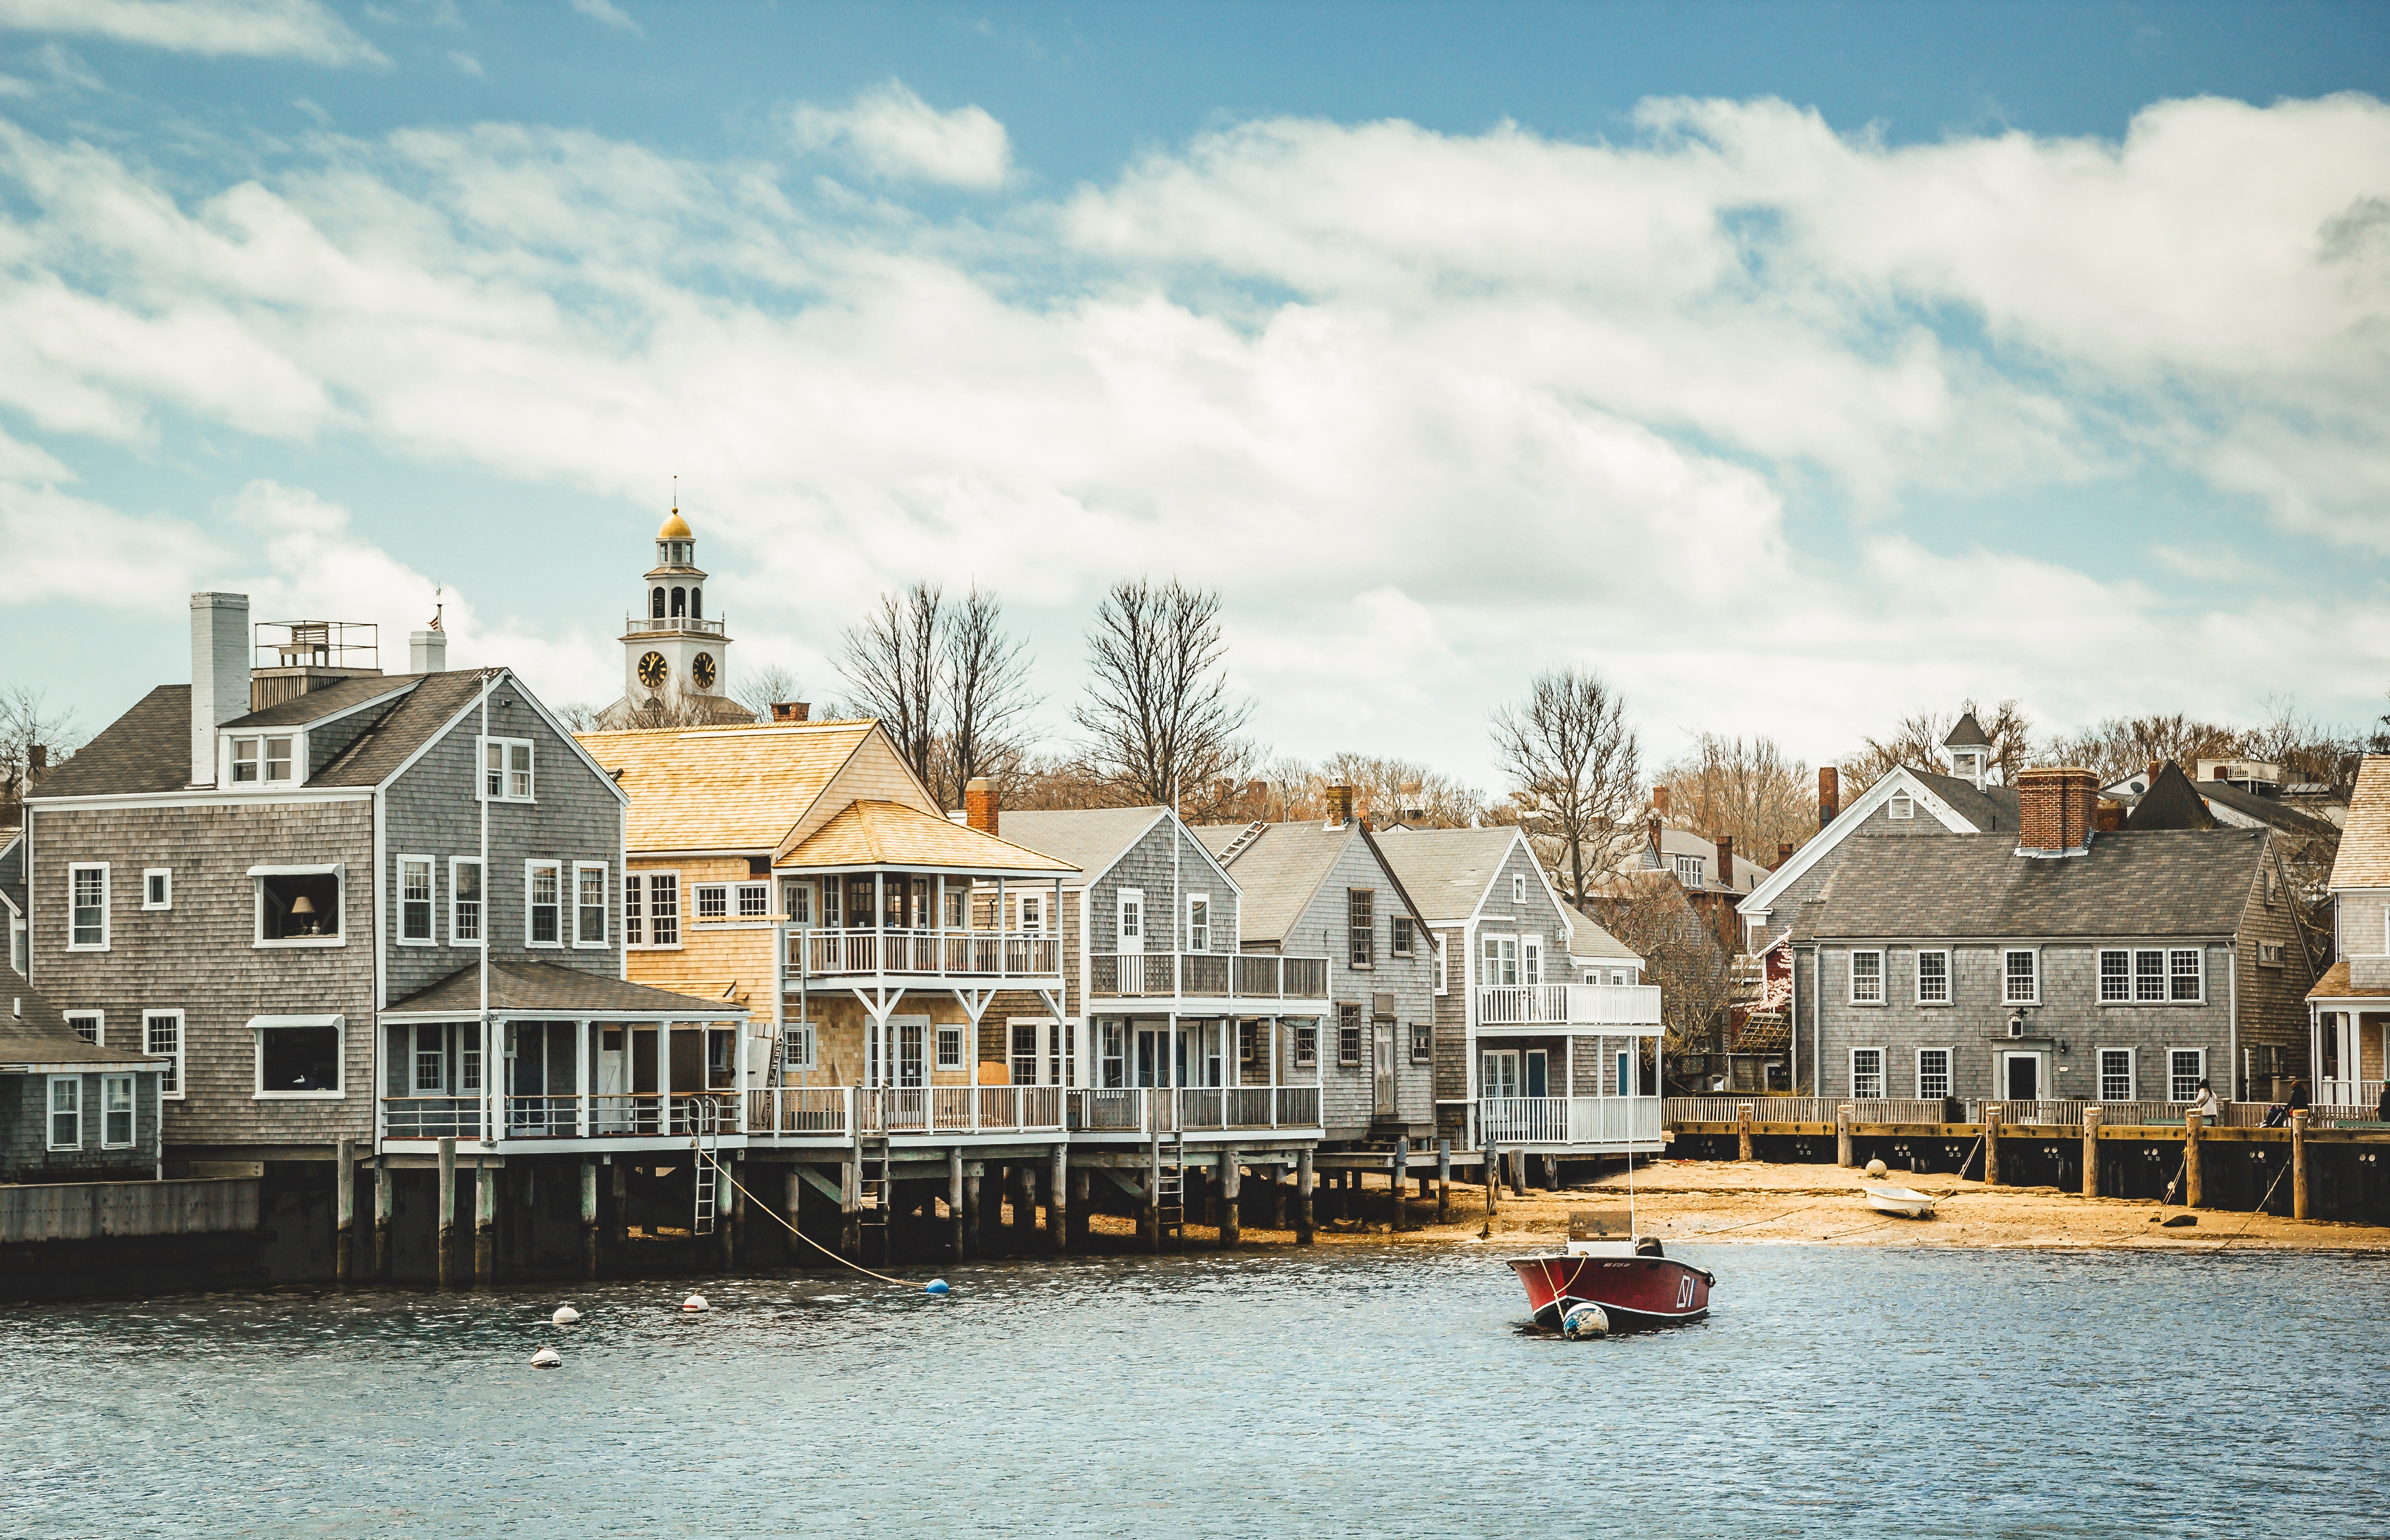 Historic Nantucket Lightship shines bright in Boston - The Boston